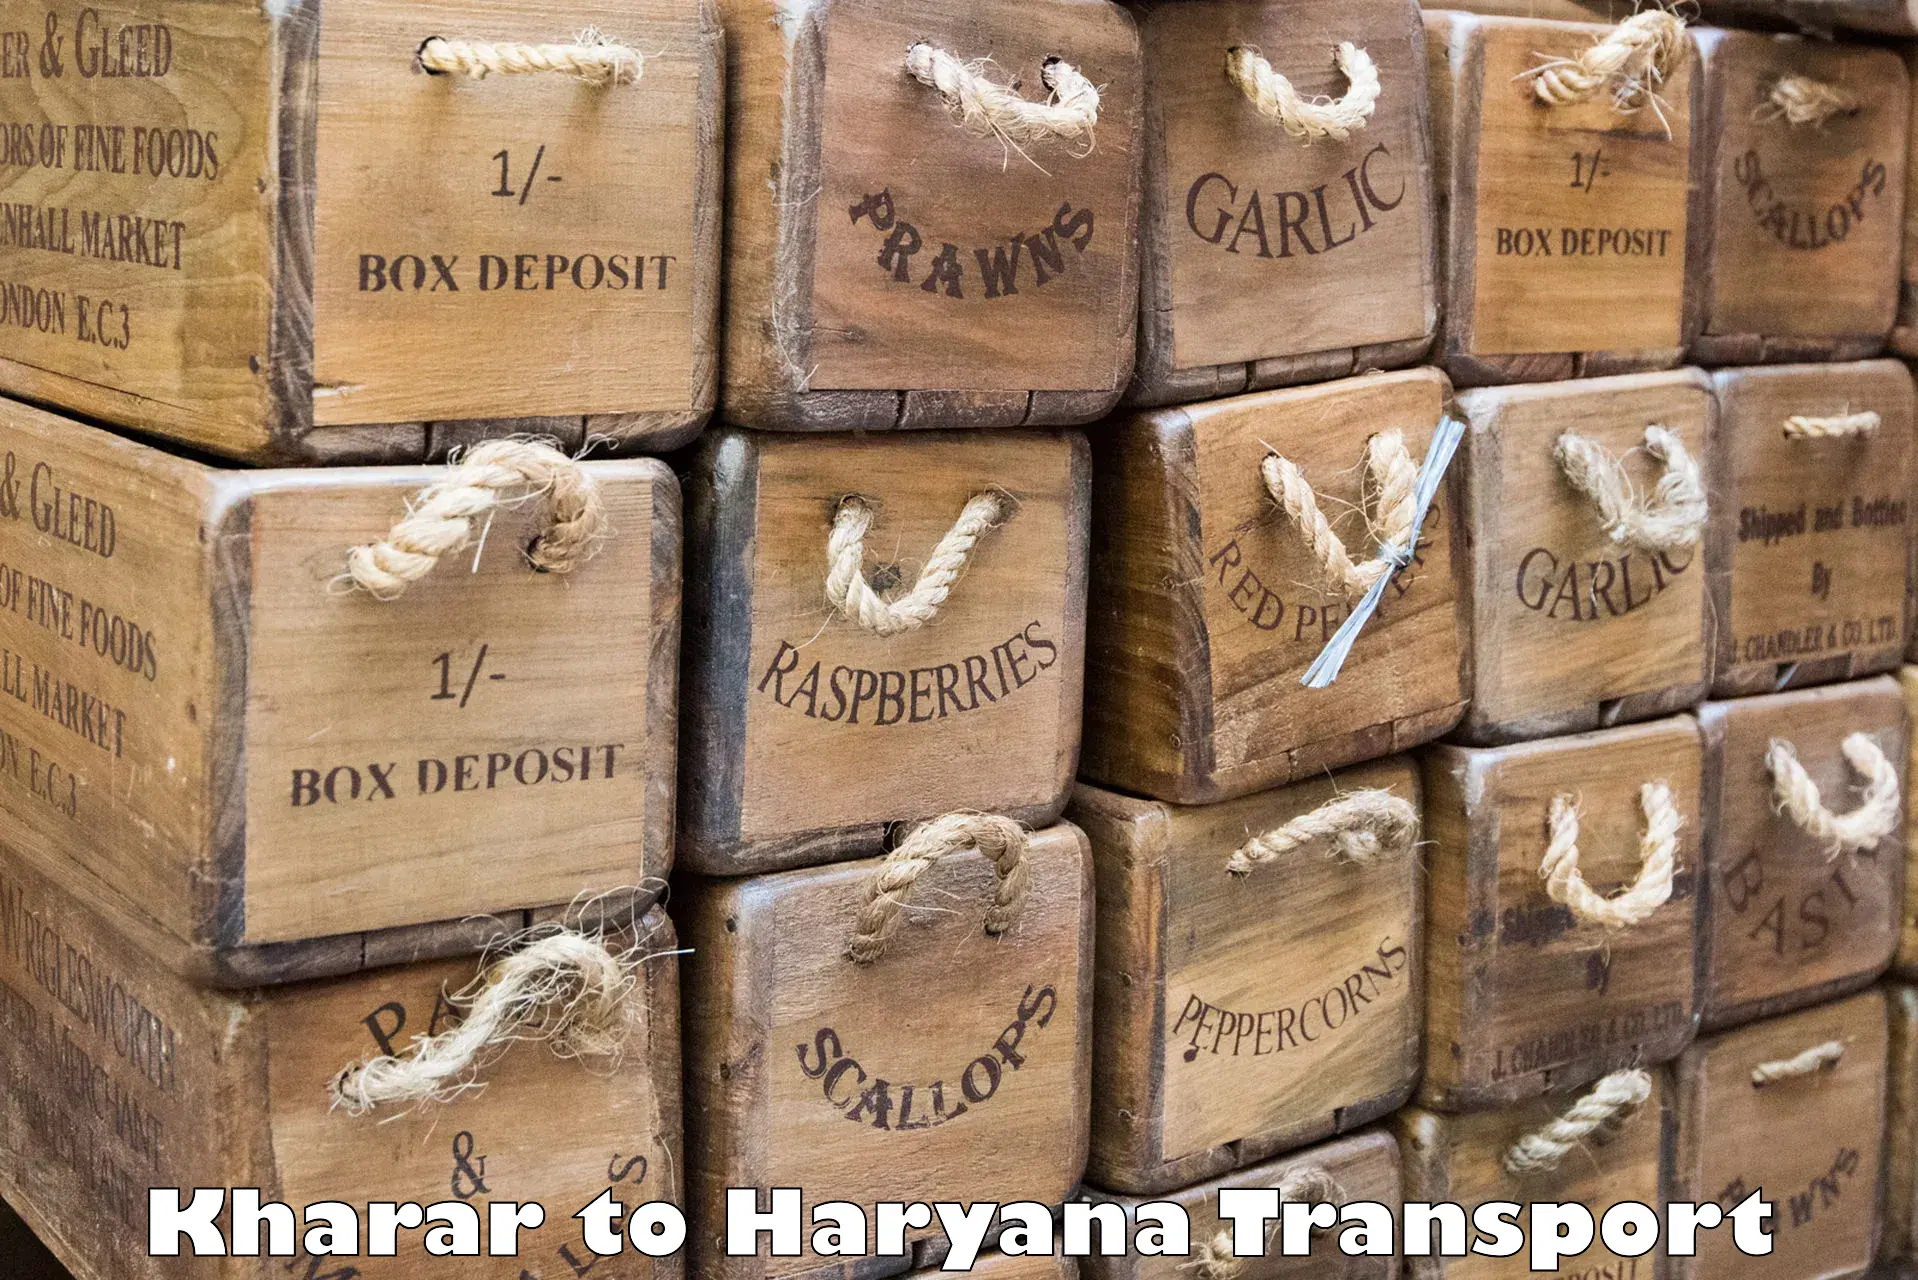 Part load transport service in India Kharar to Charkhari